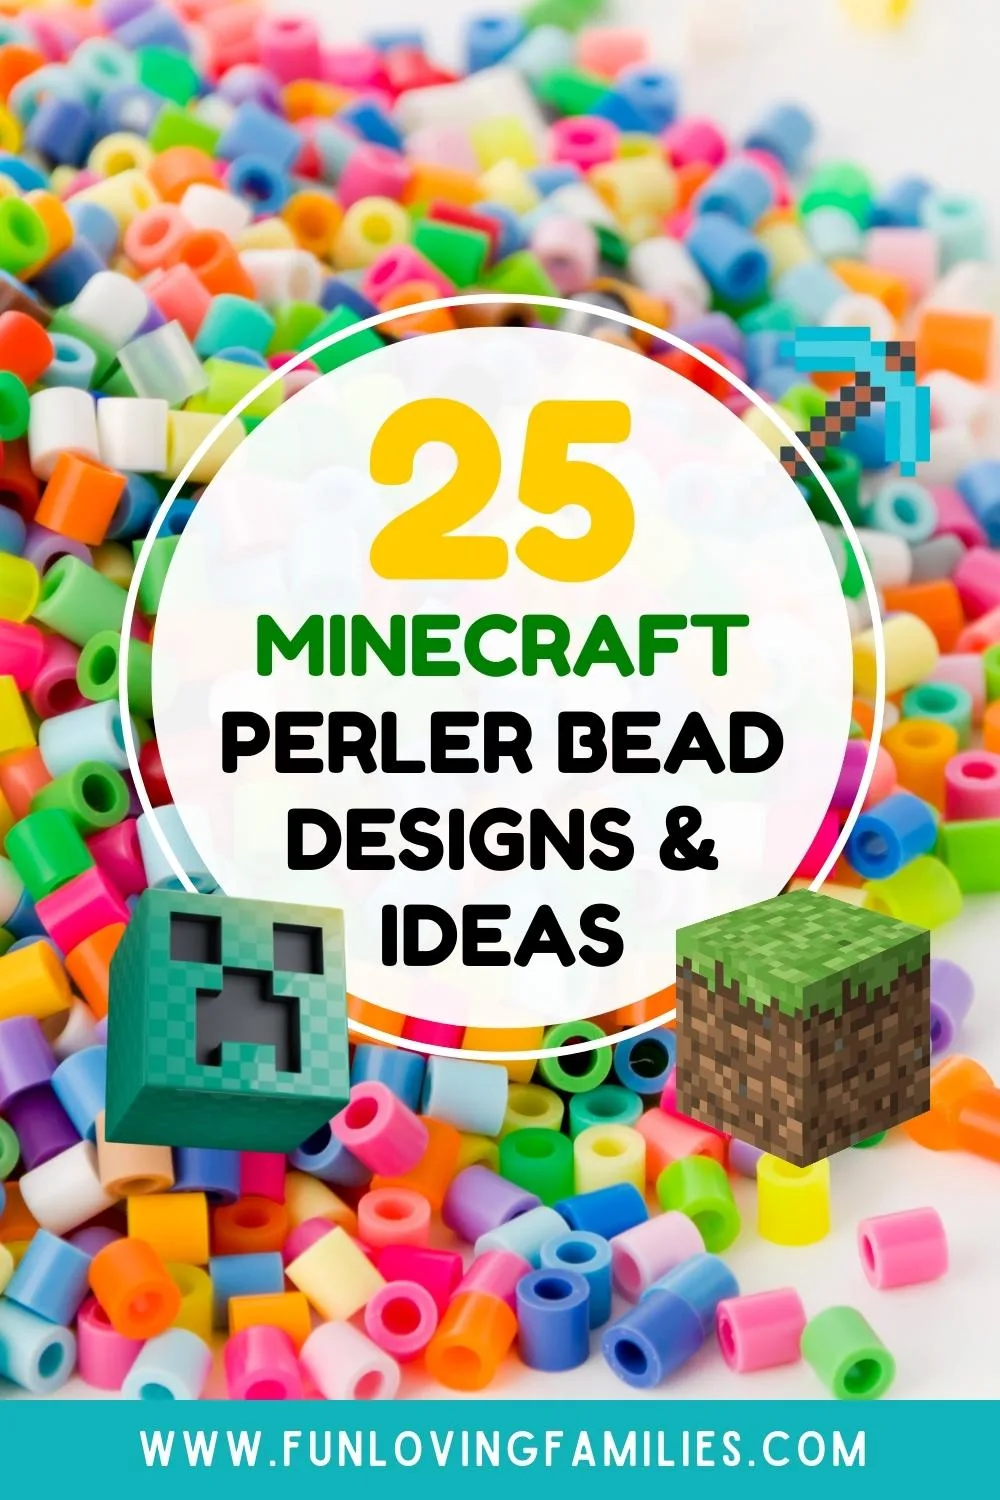 25 Minecraft Perler Bead Patterns, Designs and Ideas pin image